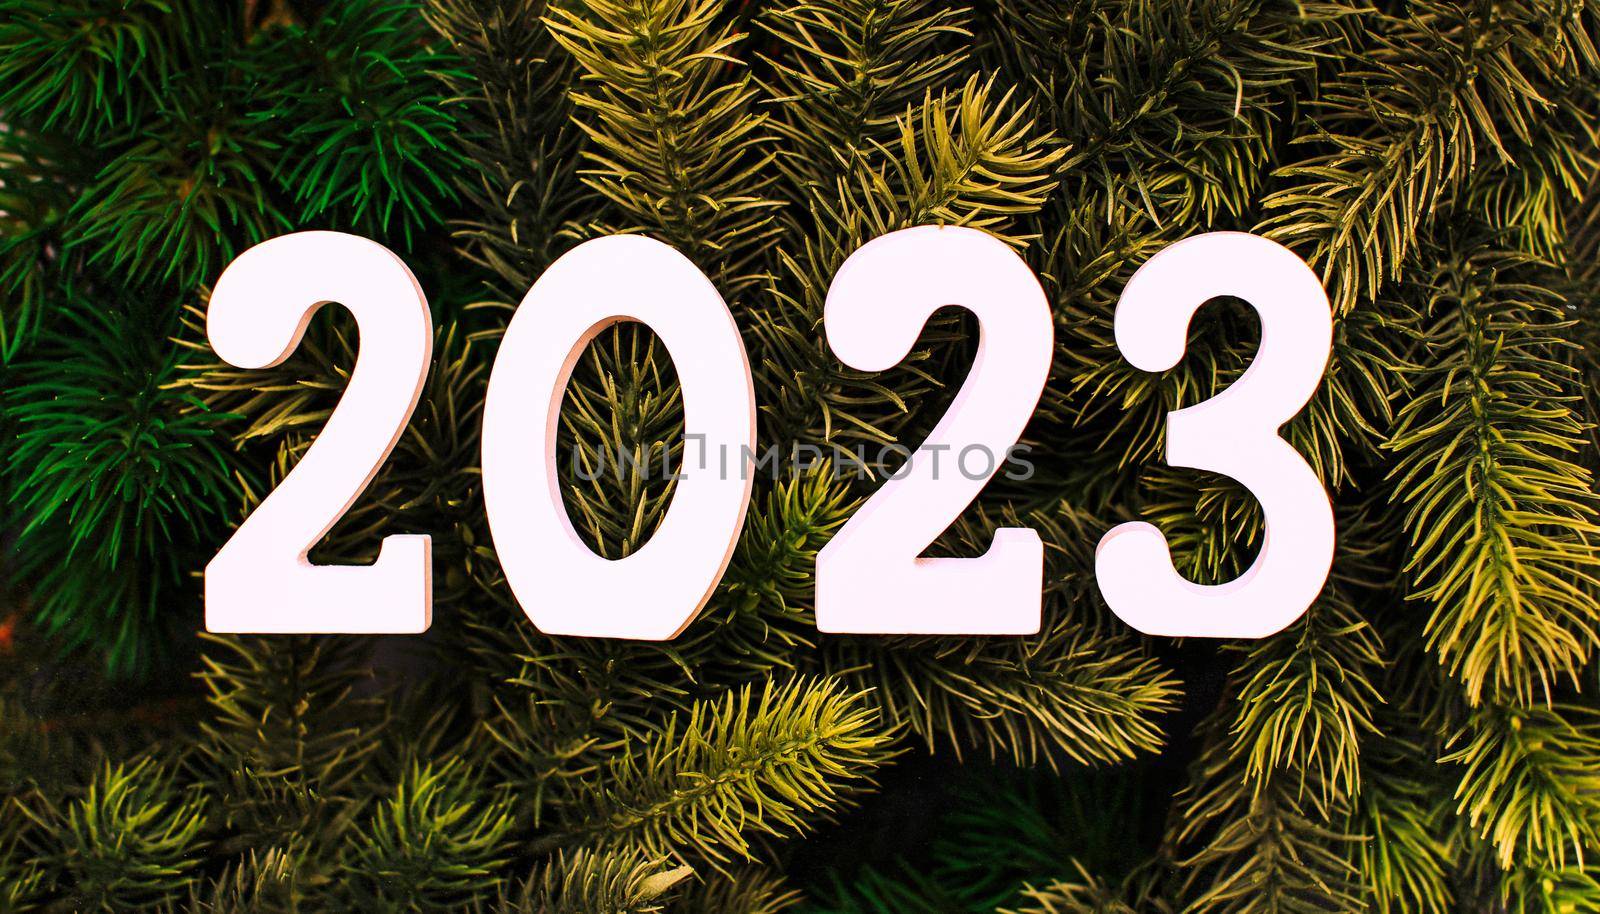 New Year's Eve 2023 Celebration Background. Happy New Year 2023.